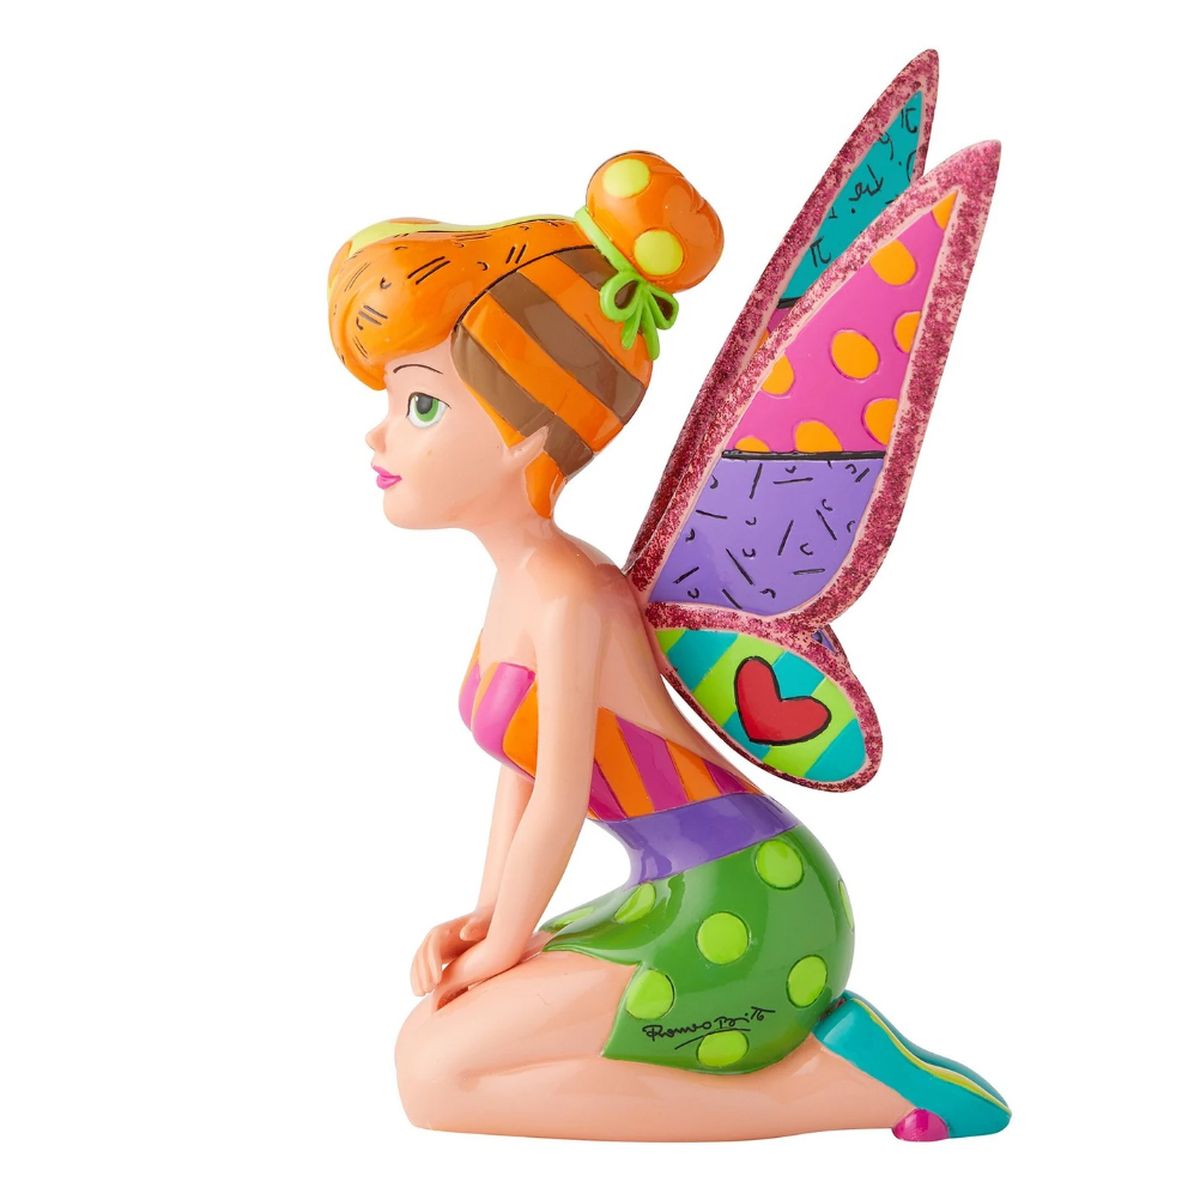 Tinker Bell Figurine by Romero Britto